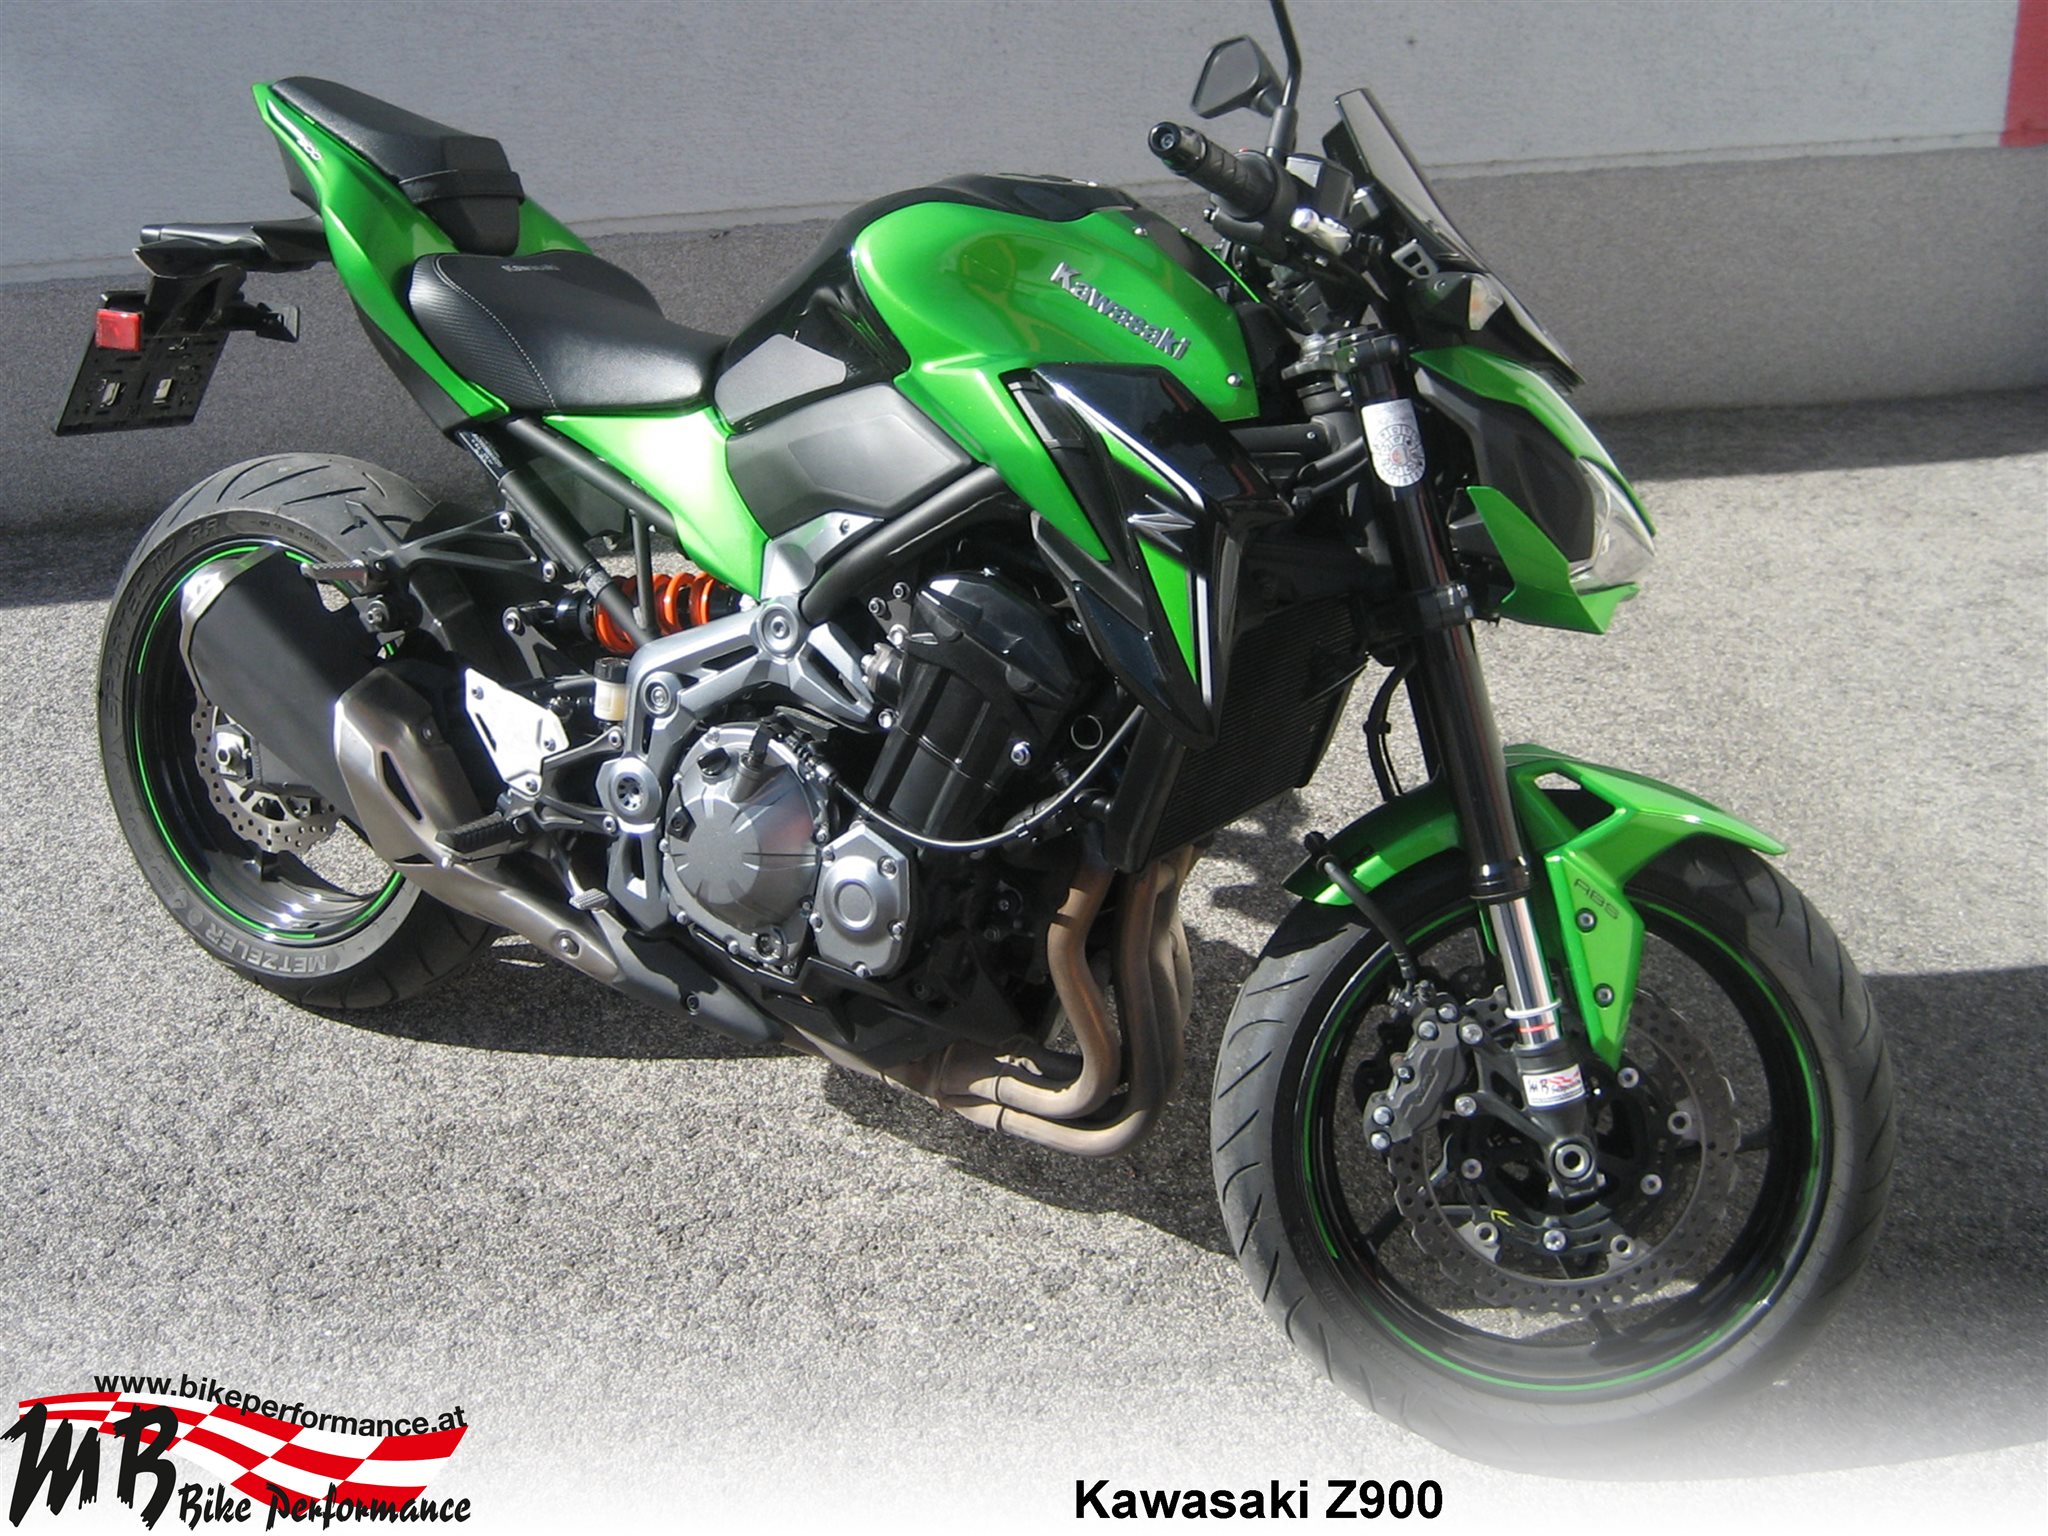 Details zum Custom-Bike Kawasaki Z900 des Händlers MB Bike Performance GmbH